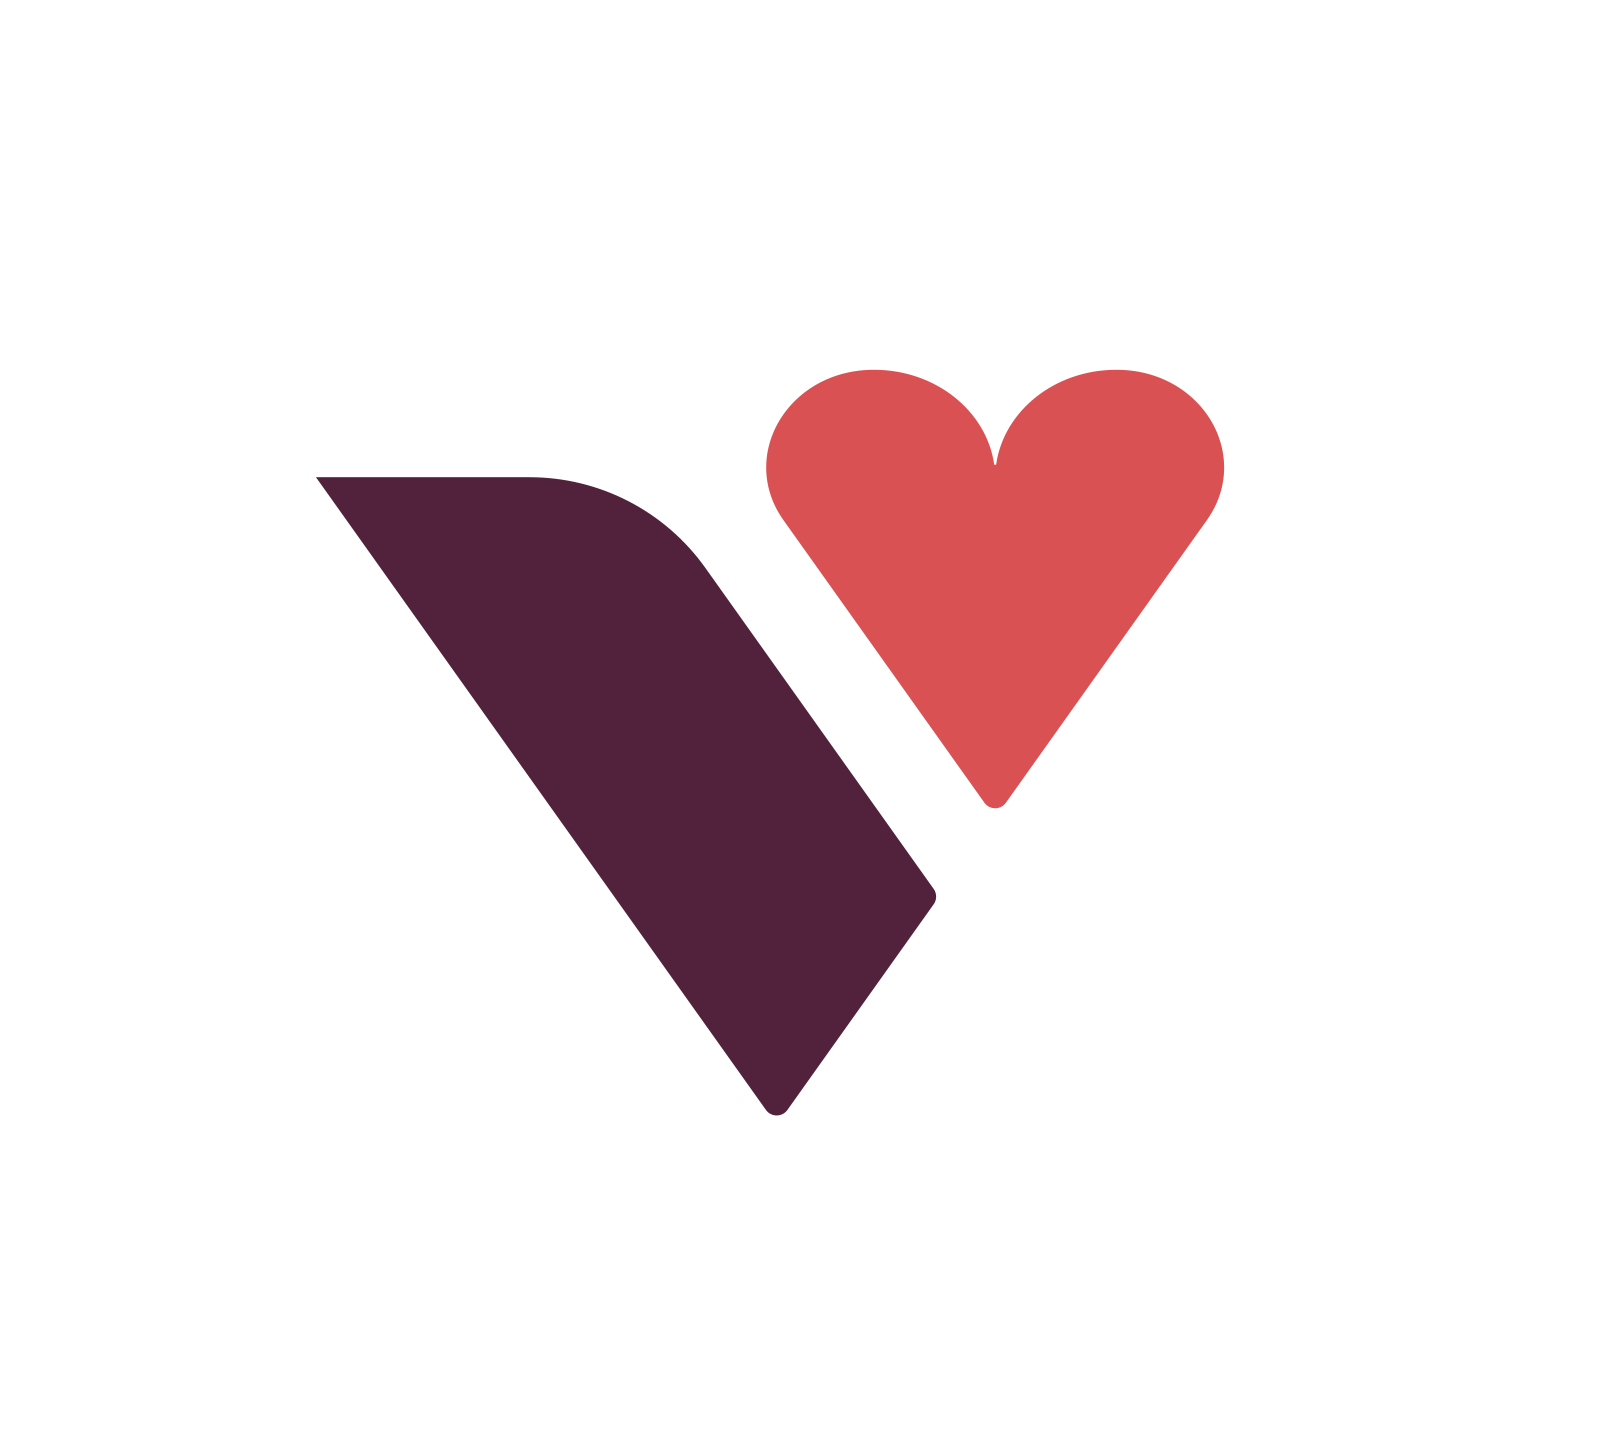 branding-and-logo-design-sydney-creative-agency-veemance-5